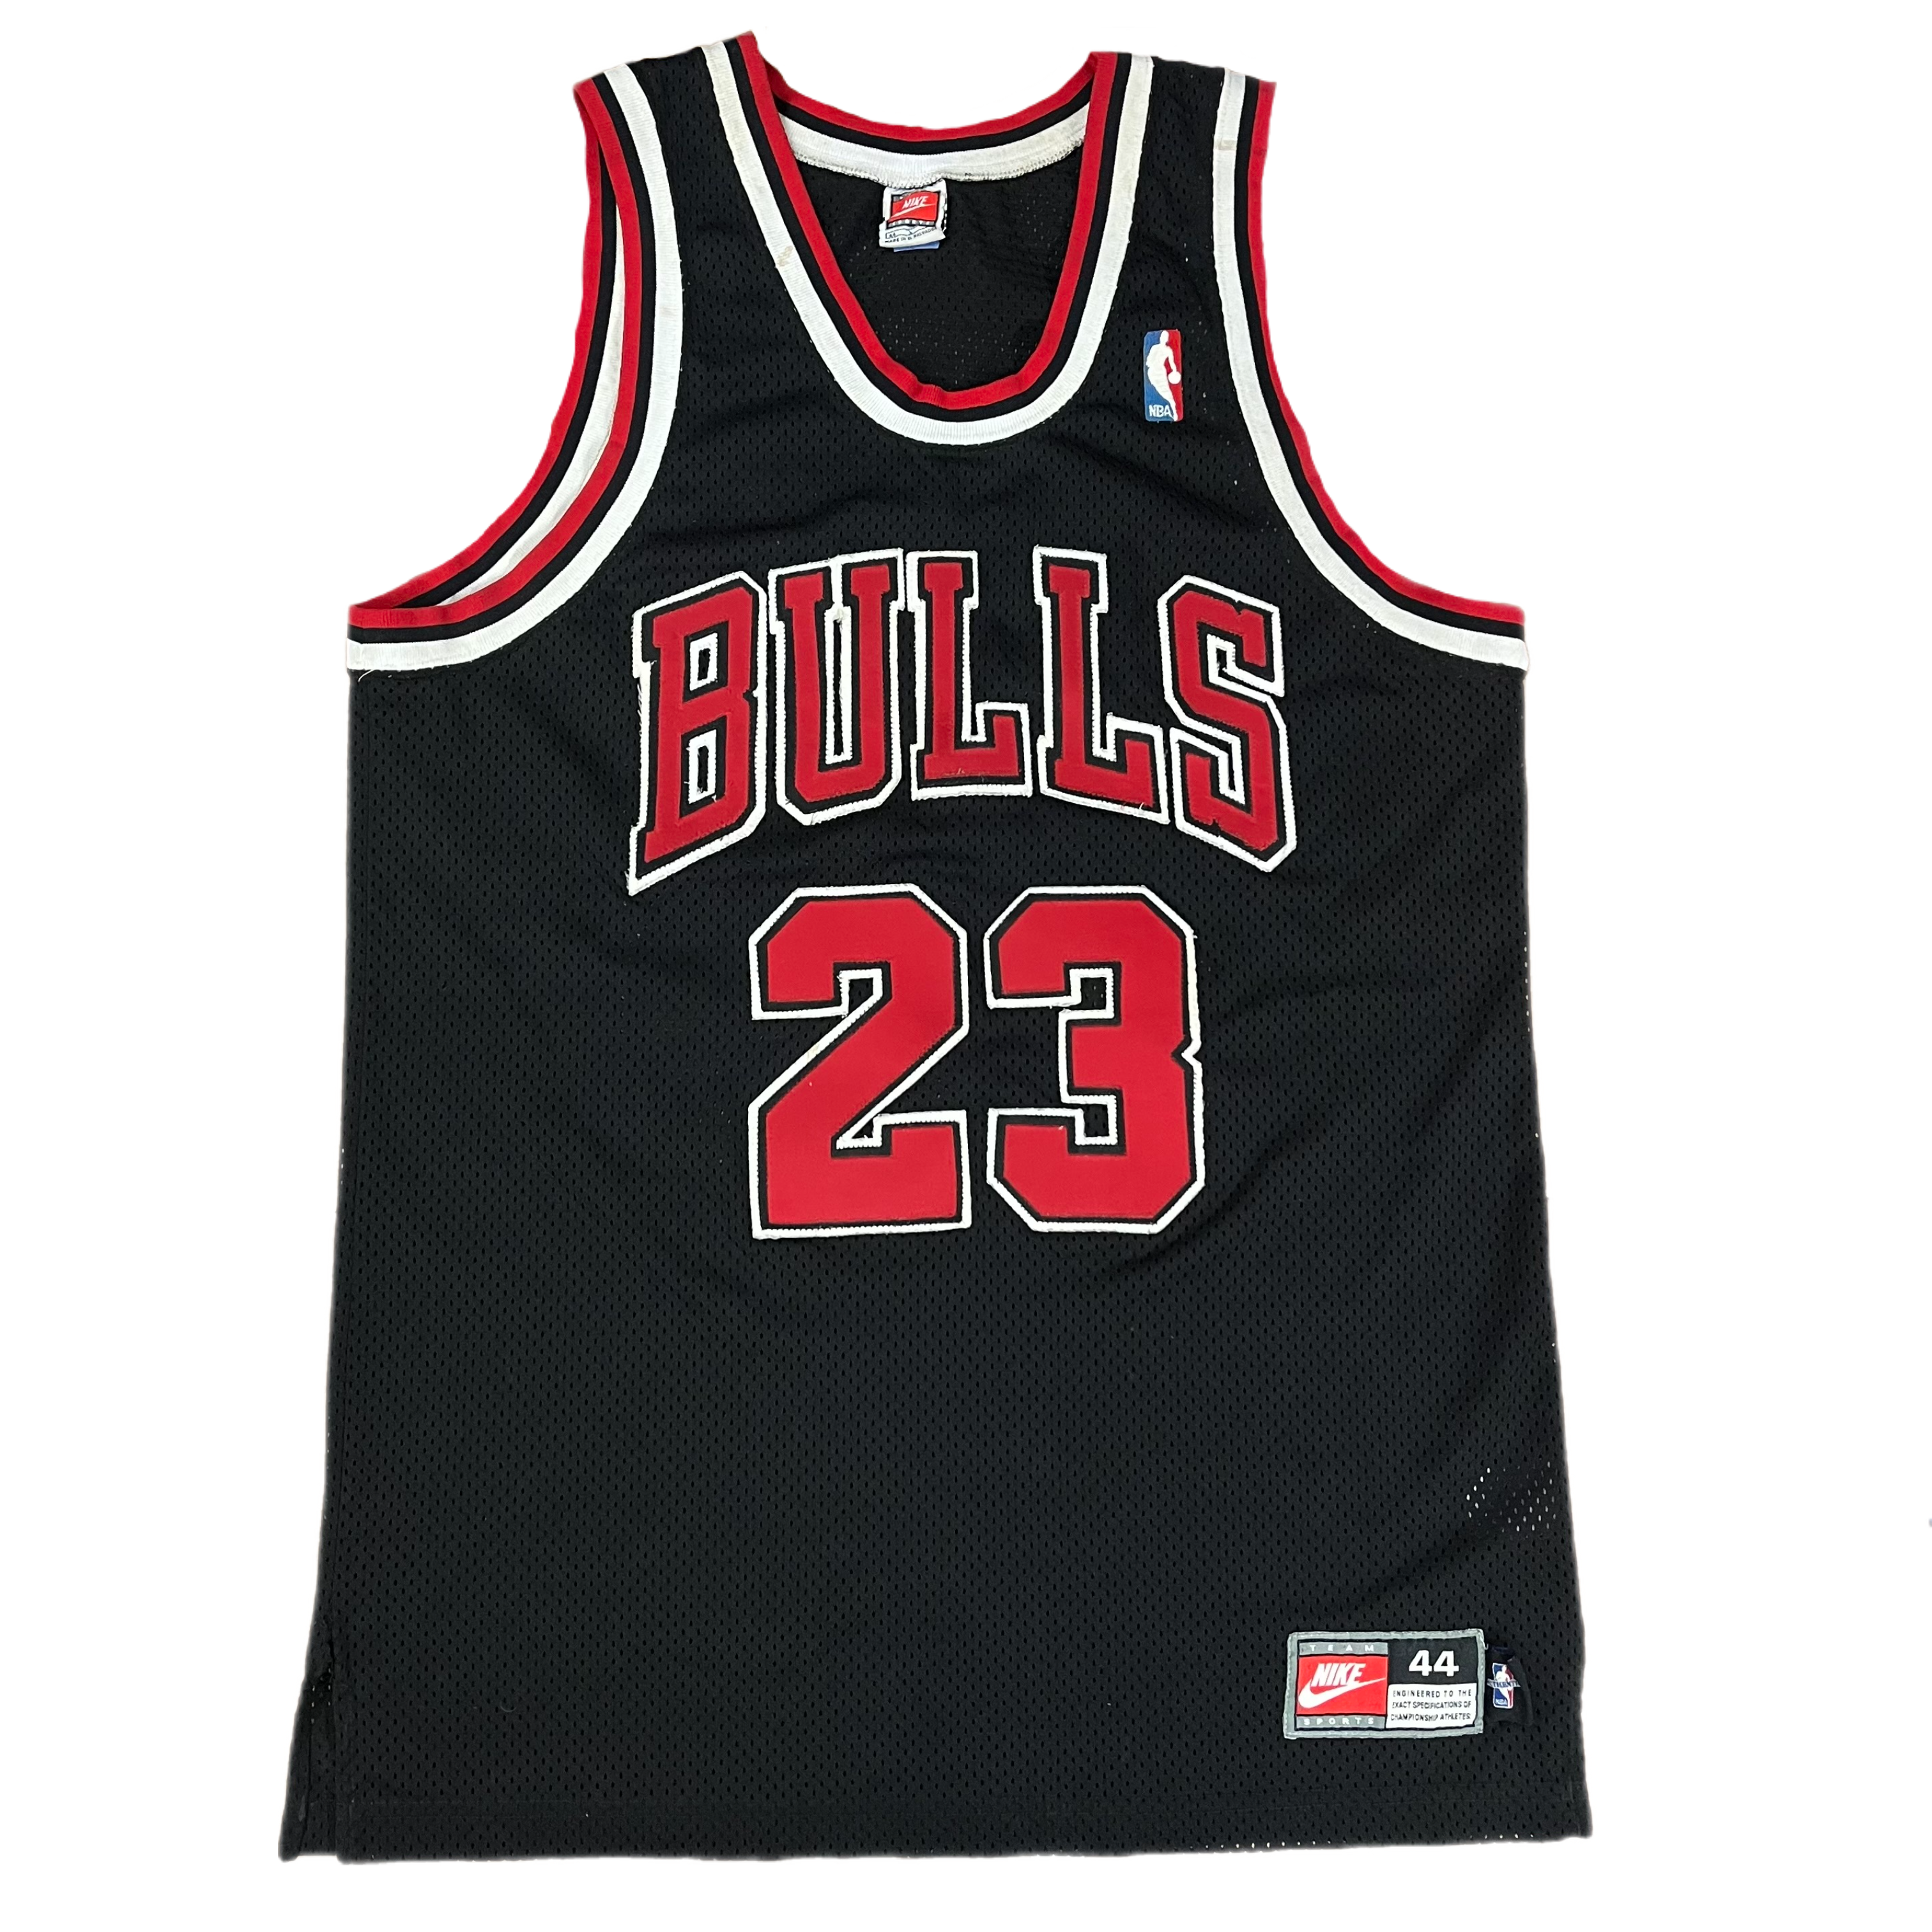 Nike Chicago Bulls Basketball Jersey #23 Jordan